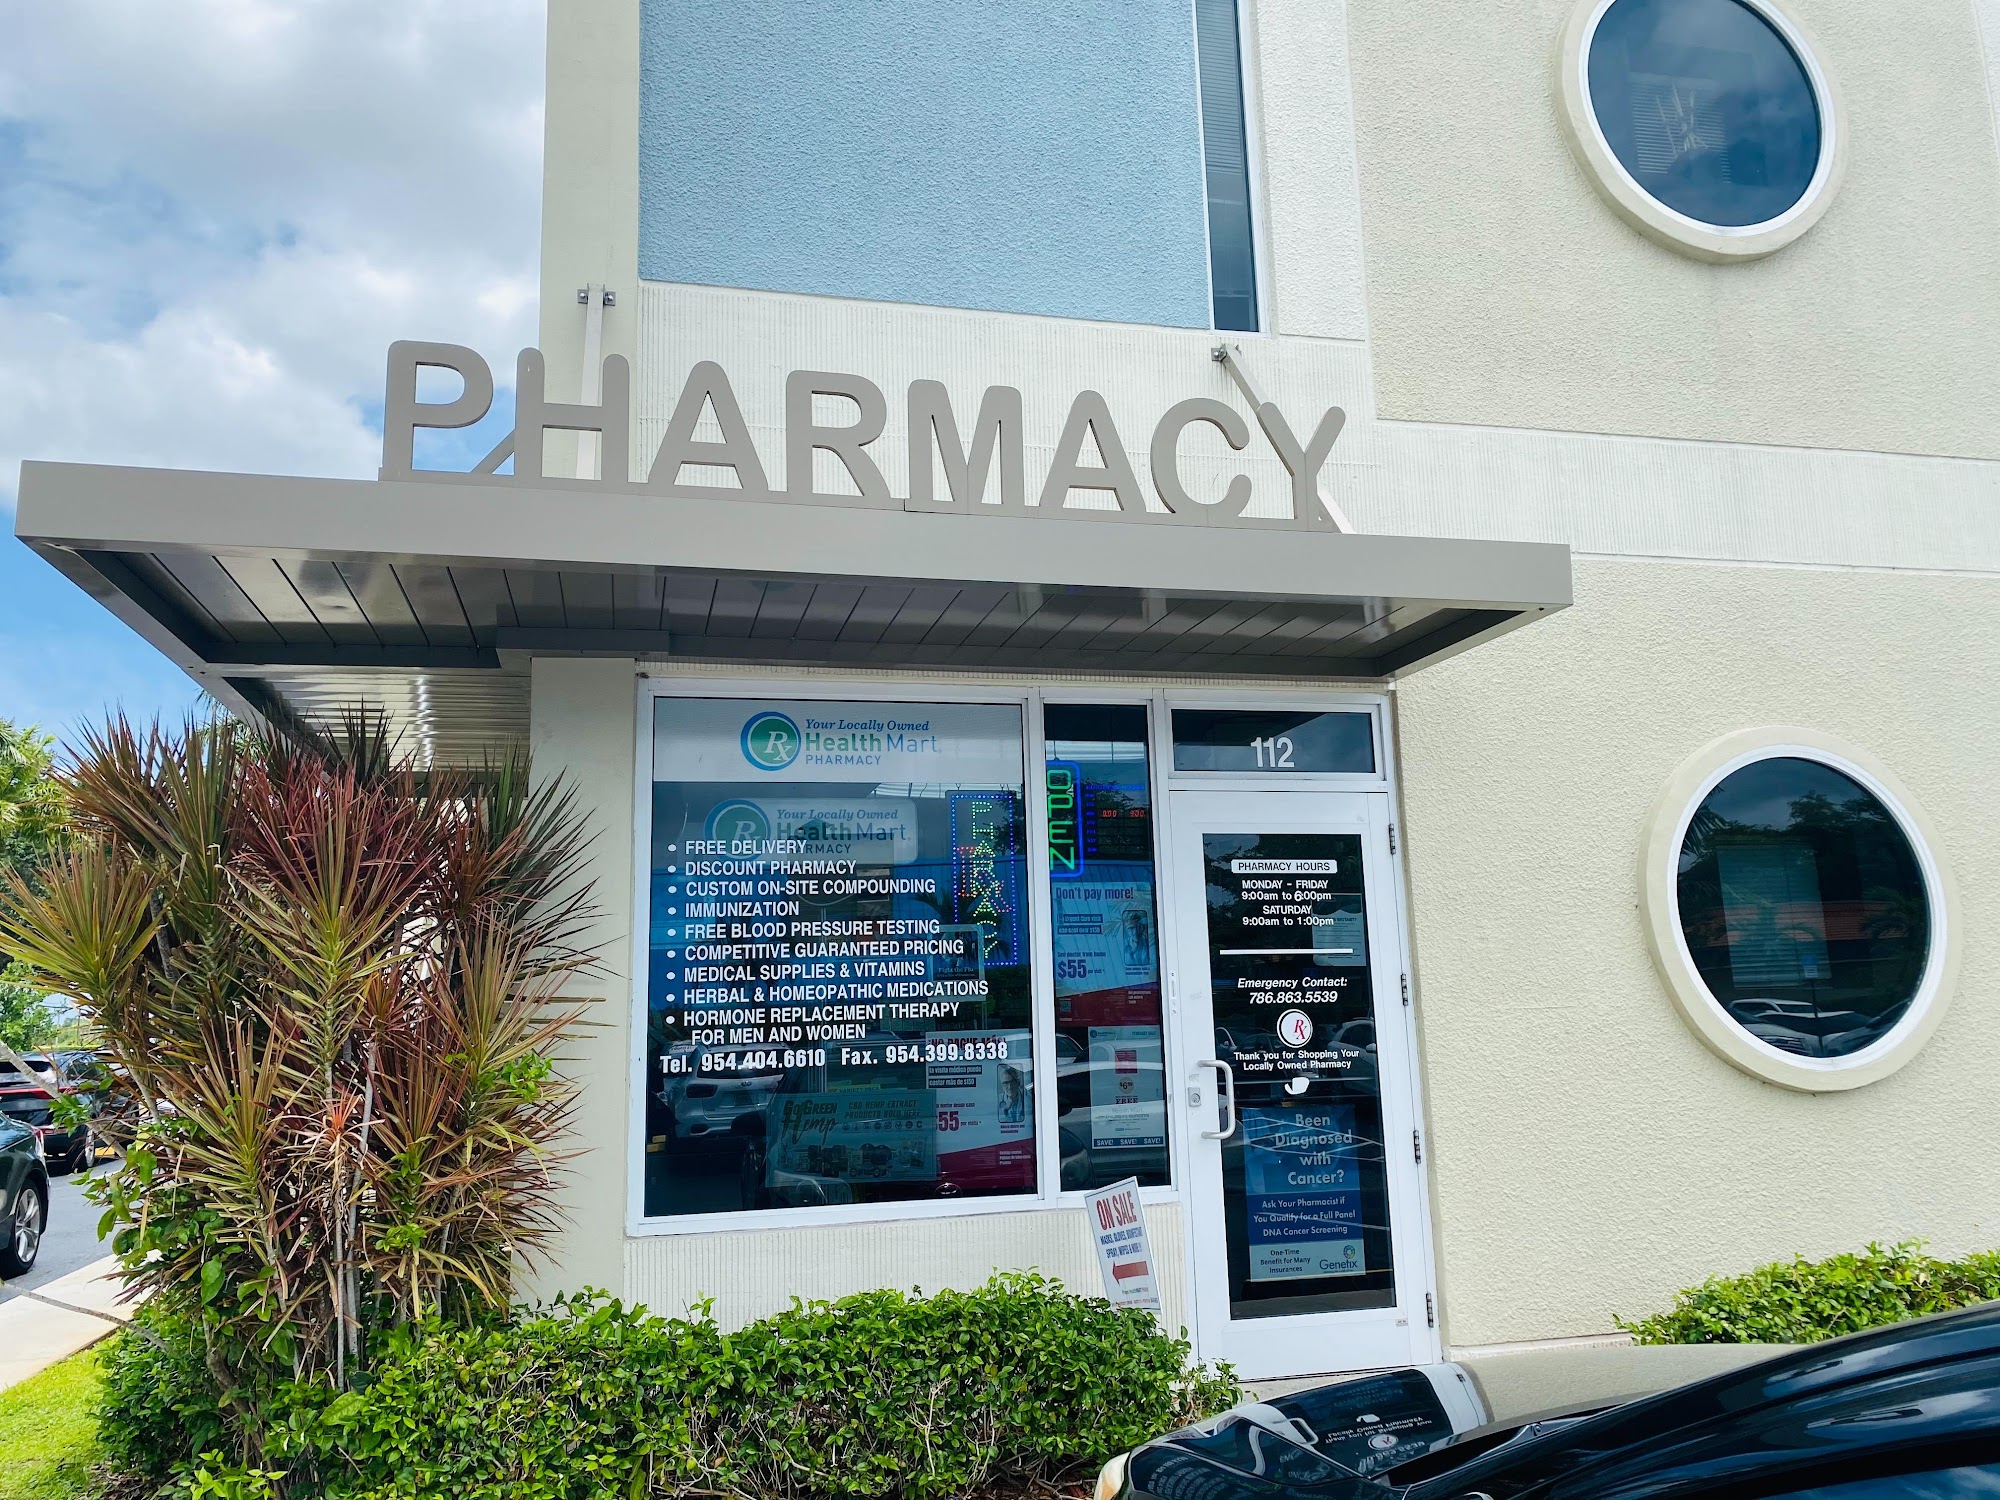 Pines Health Mart Pharmacy